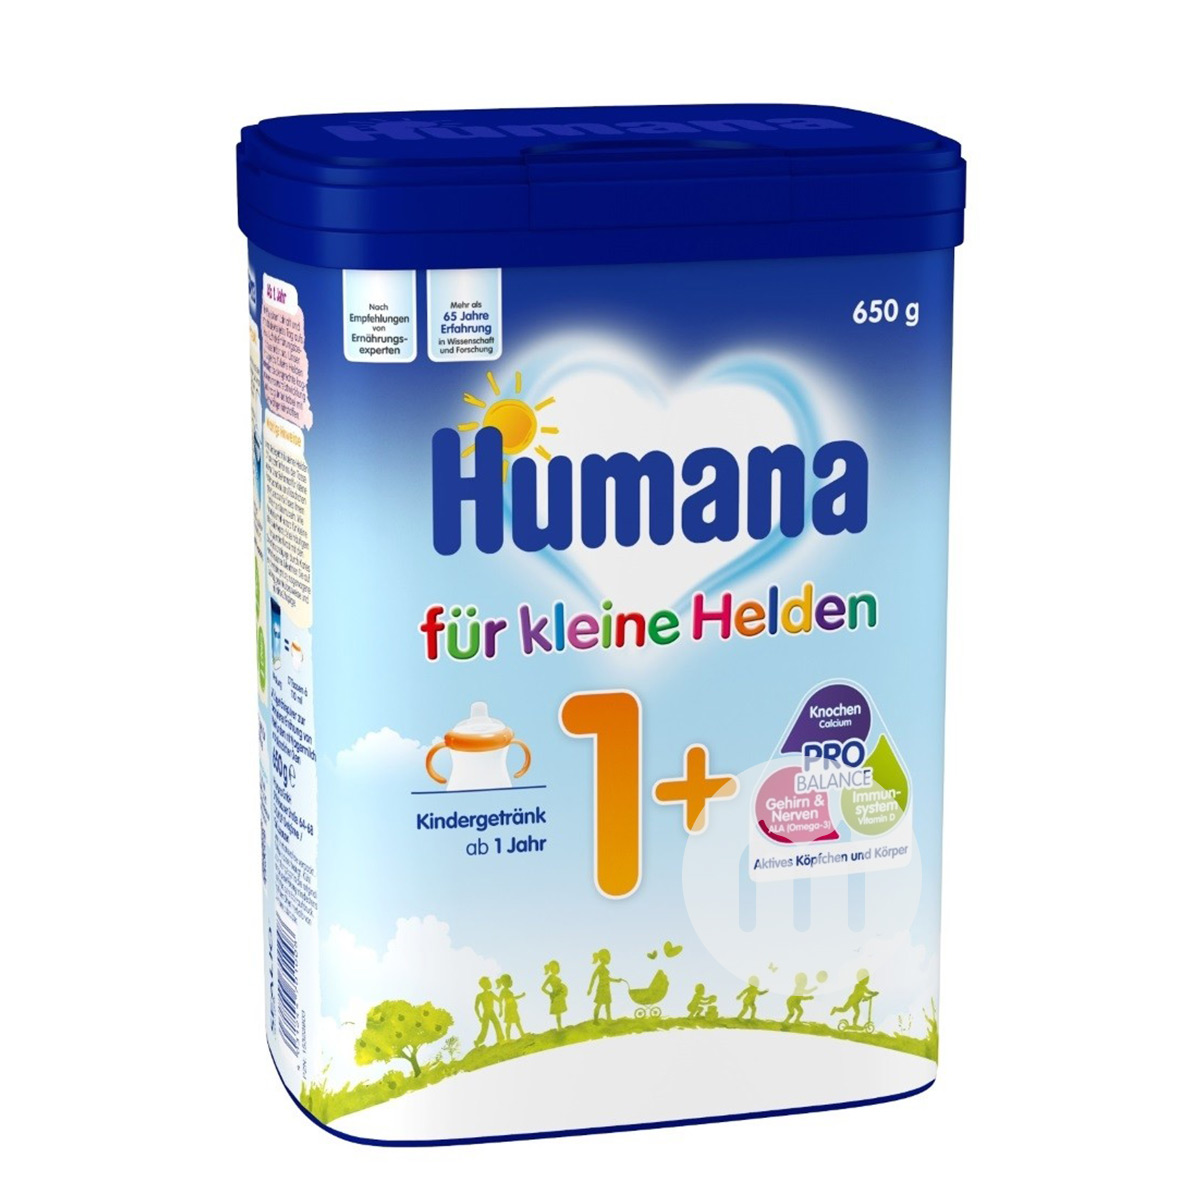 Humana 독일베이비밀크파우더 1+ 650g * 4 Box 해...